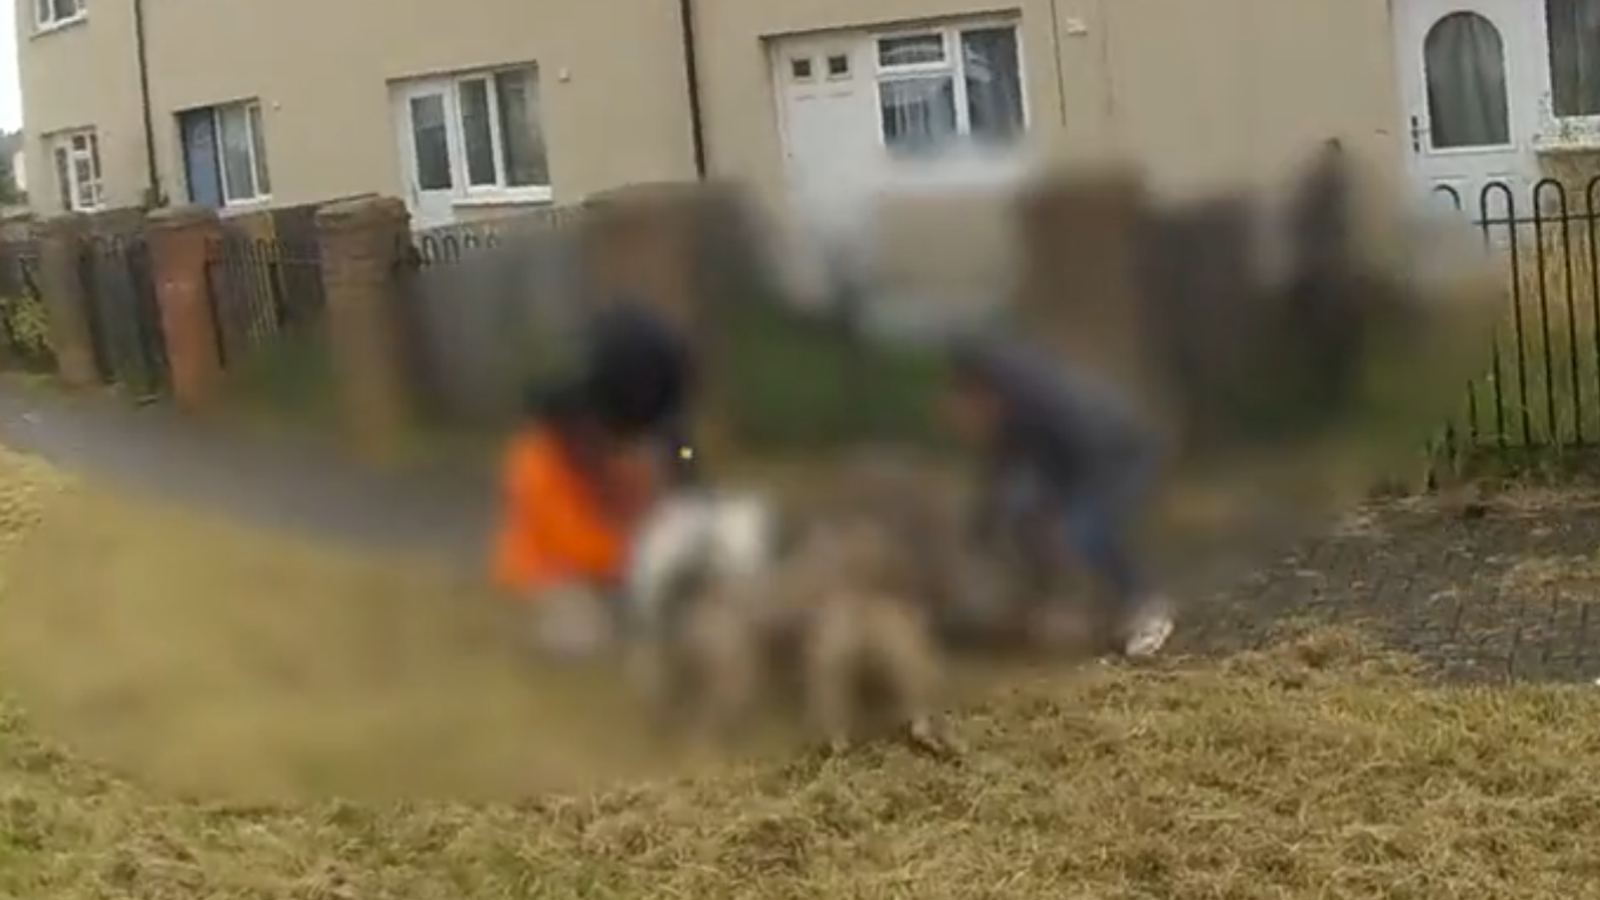 Police release bodycam footage after dog tasered and put into wheelie bin | UK News